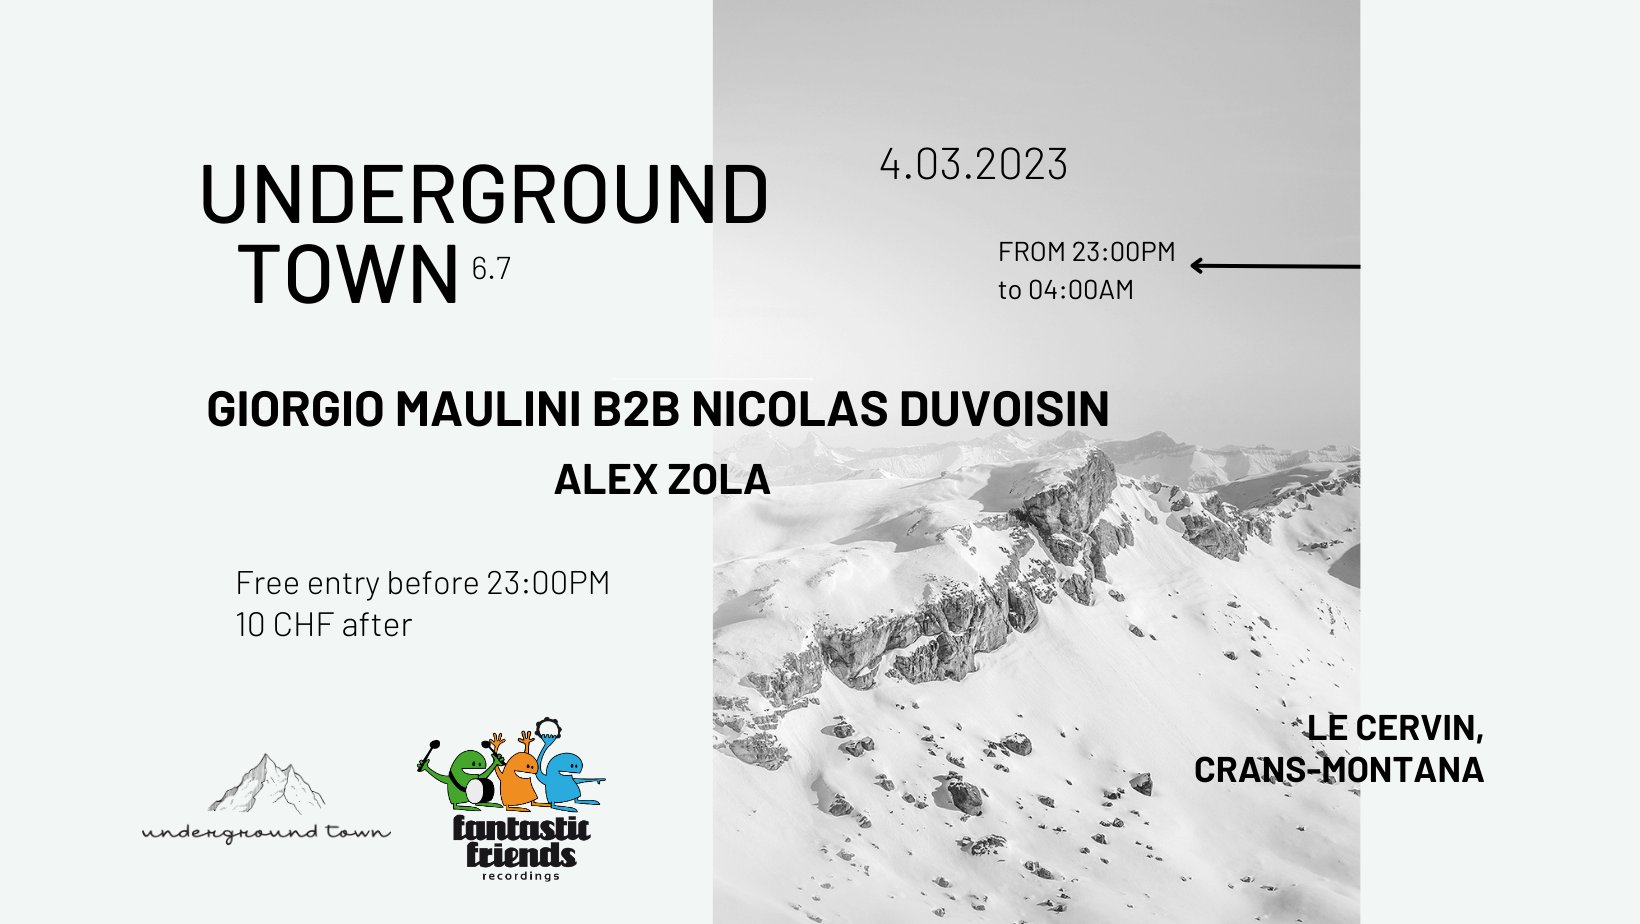 04.03.2023 -Underground Town 6.7 - Giorgio Maulini B2B Nicolas Duvoisin, Alex Zola- Crans Montana